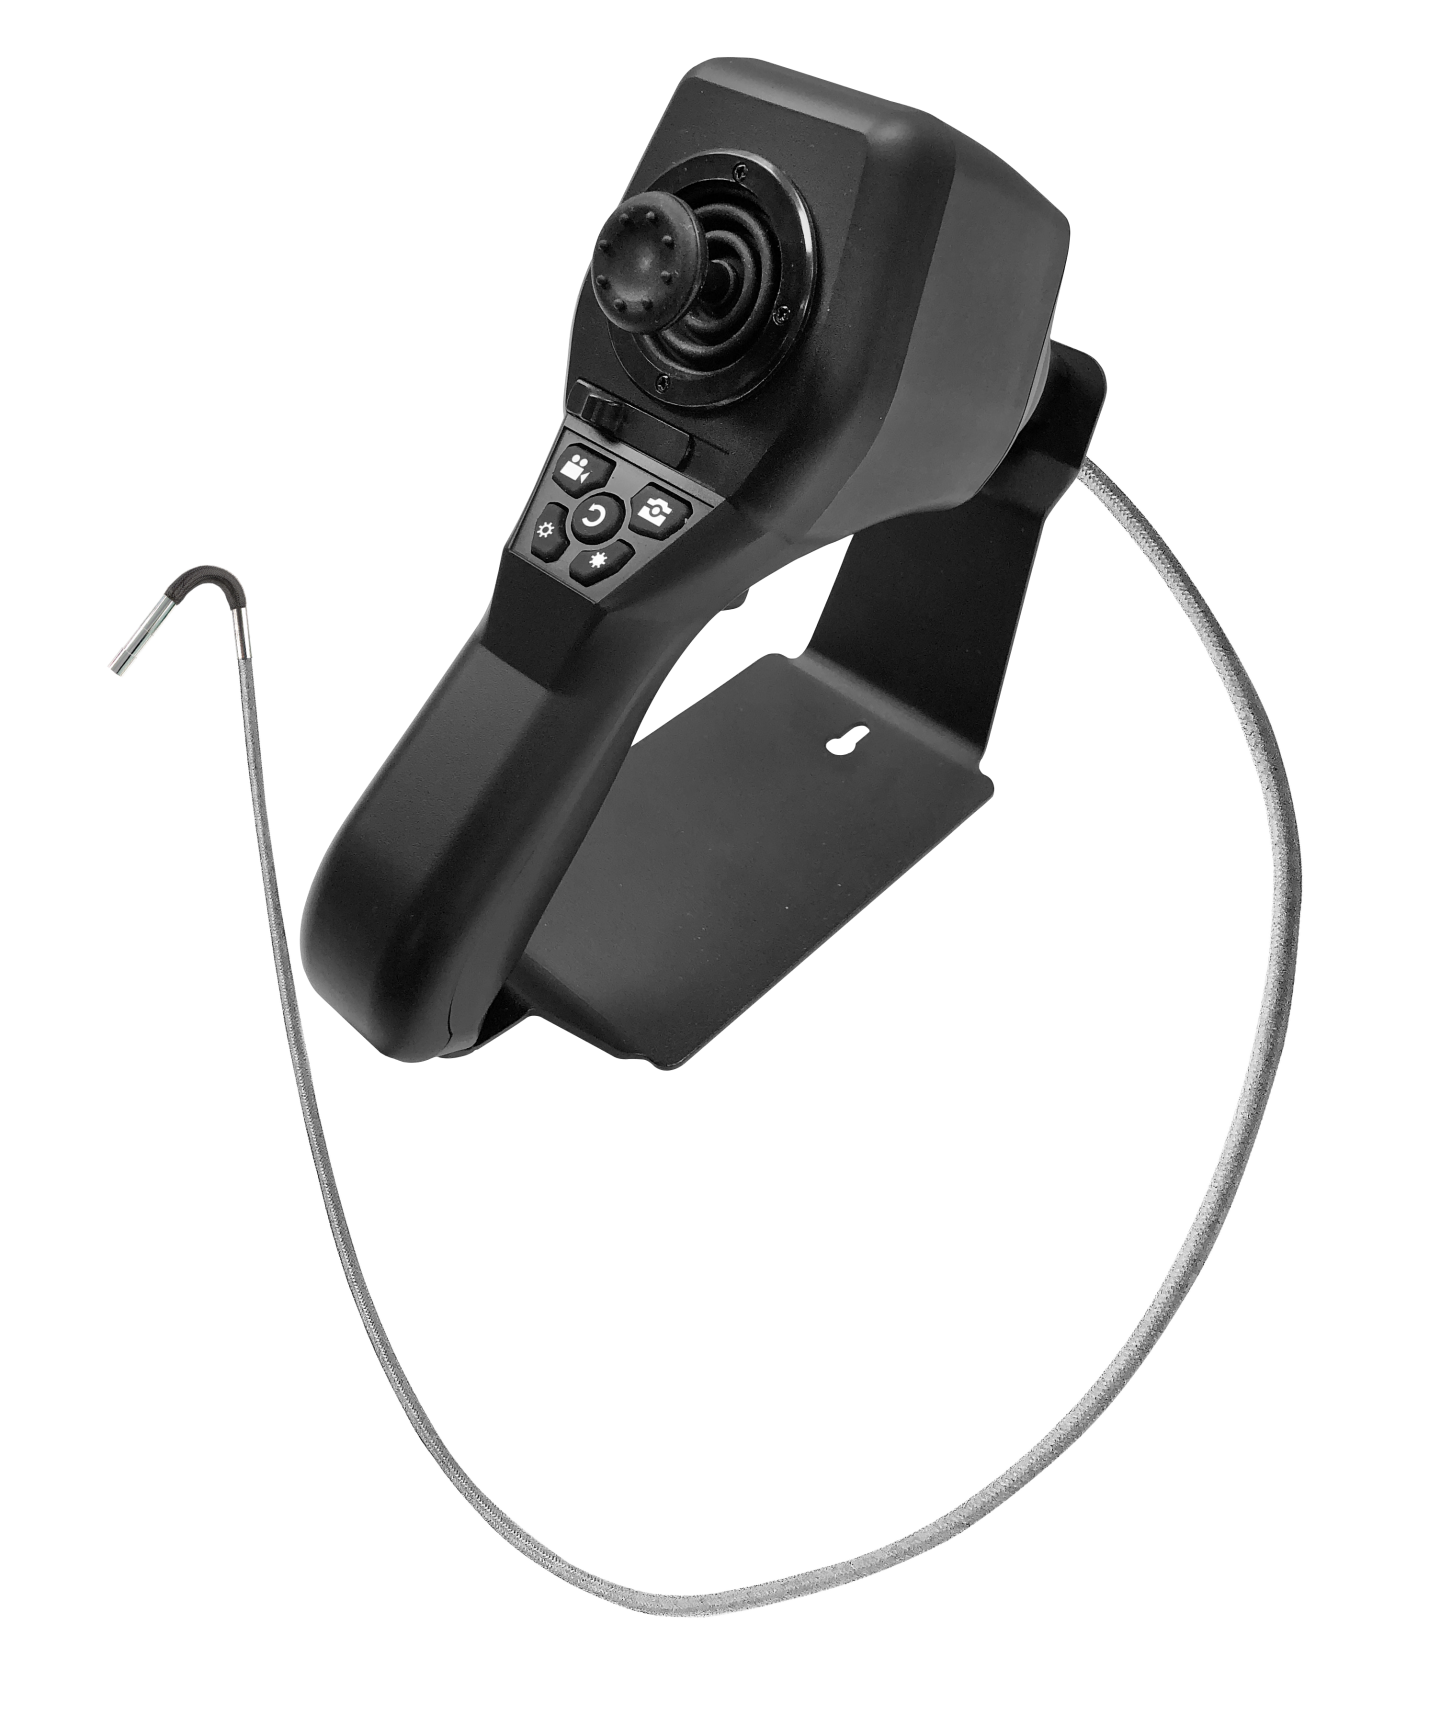 Wireless-pipe-endoscope-camera-pr-series-5-lcd